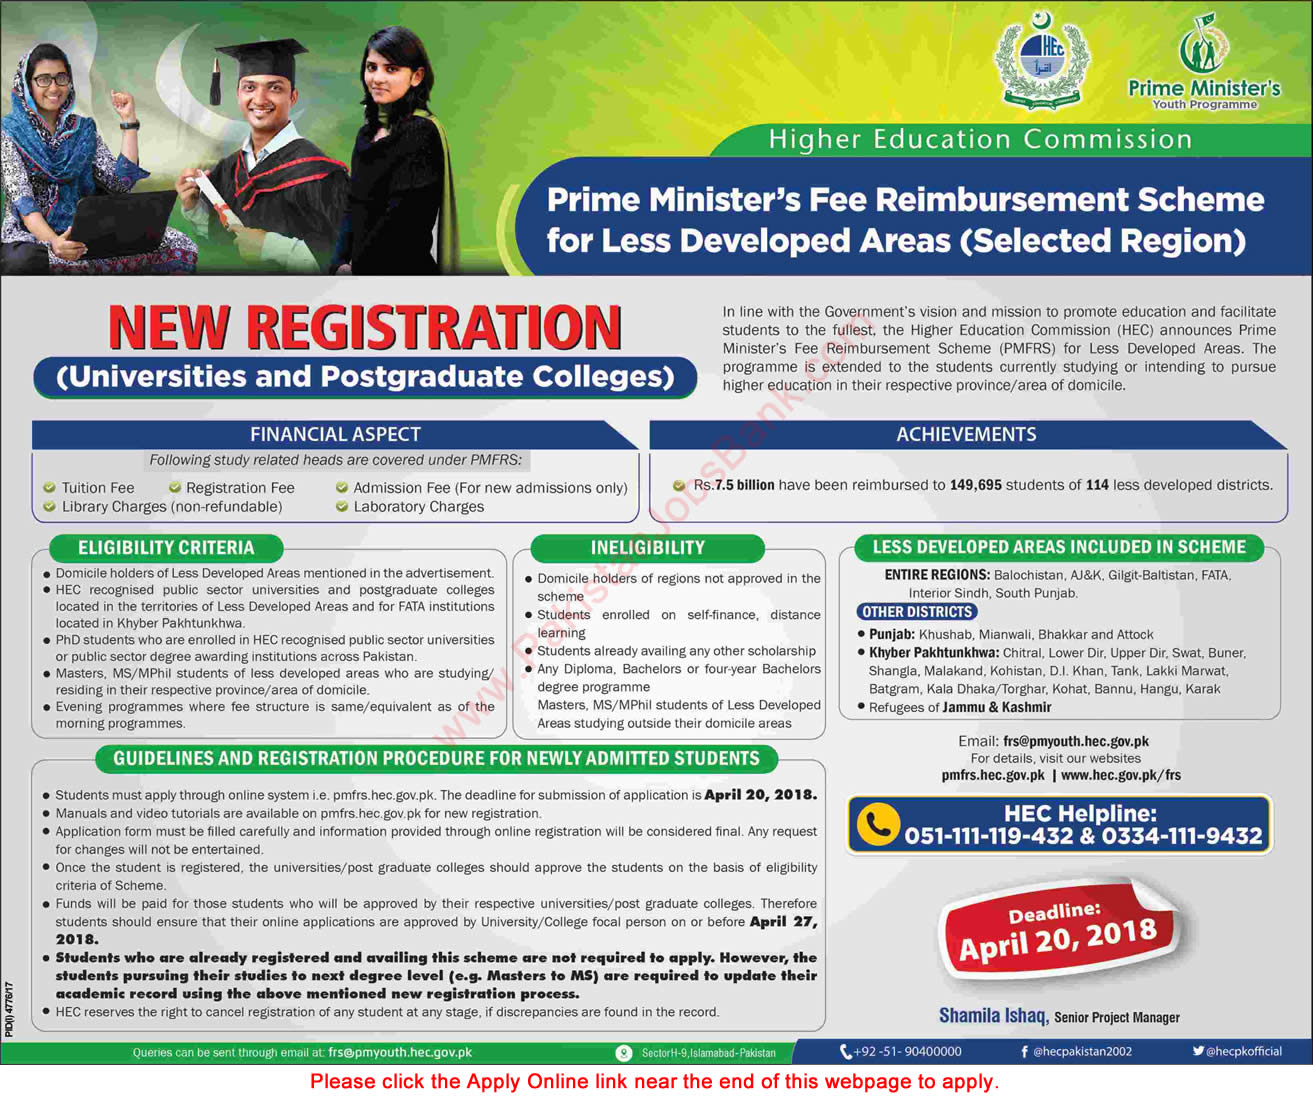 Prime Minister's Fee Reimbursement Scheme 2018 Apply Online for Masters, MS / MPhil & PhD Students Latest